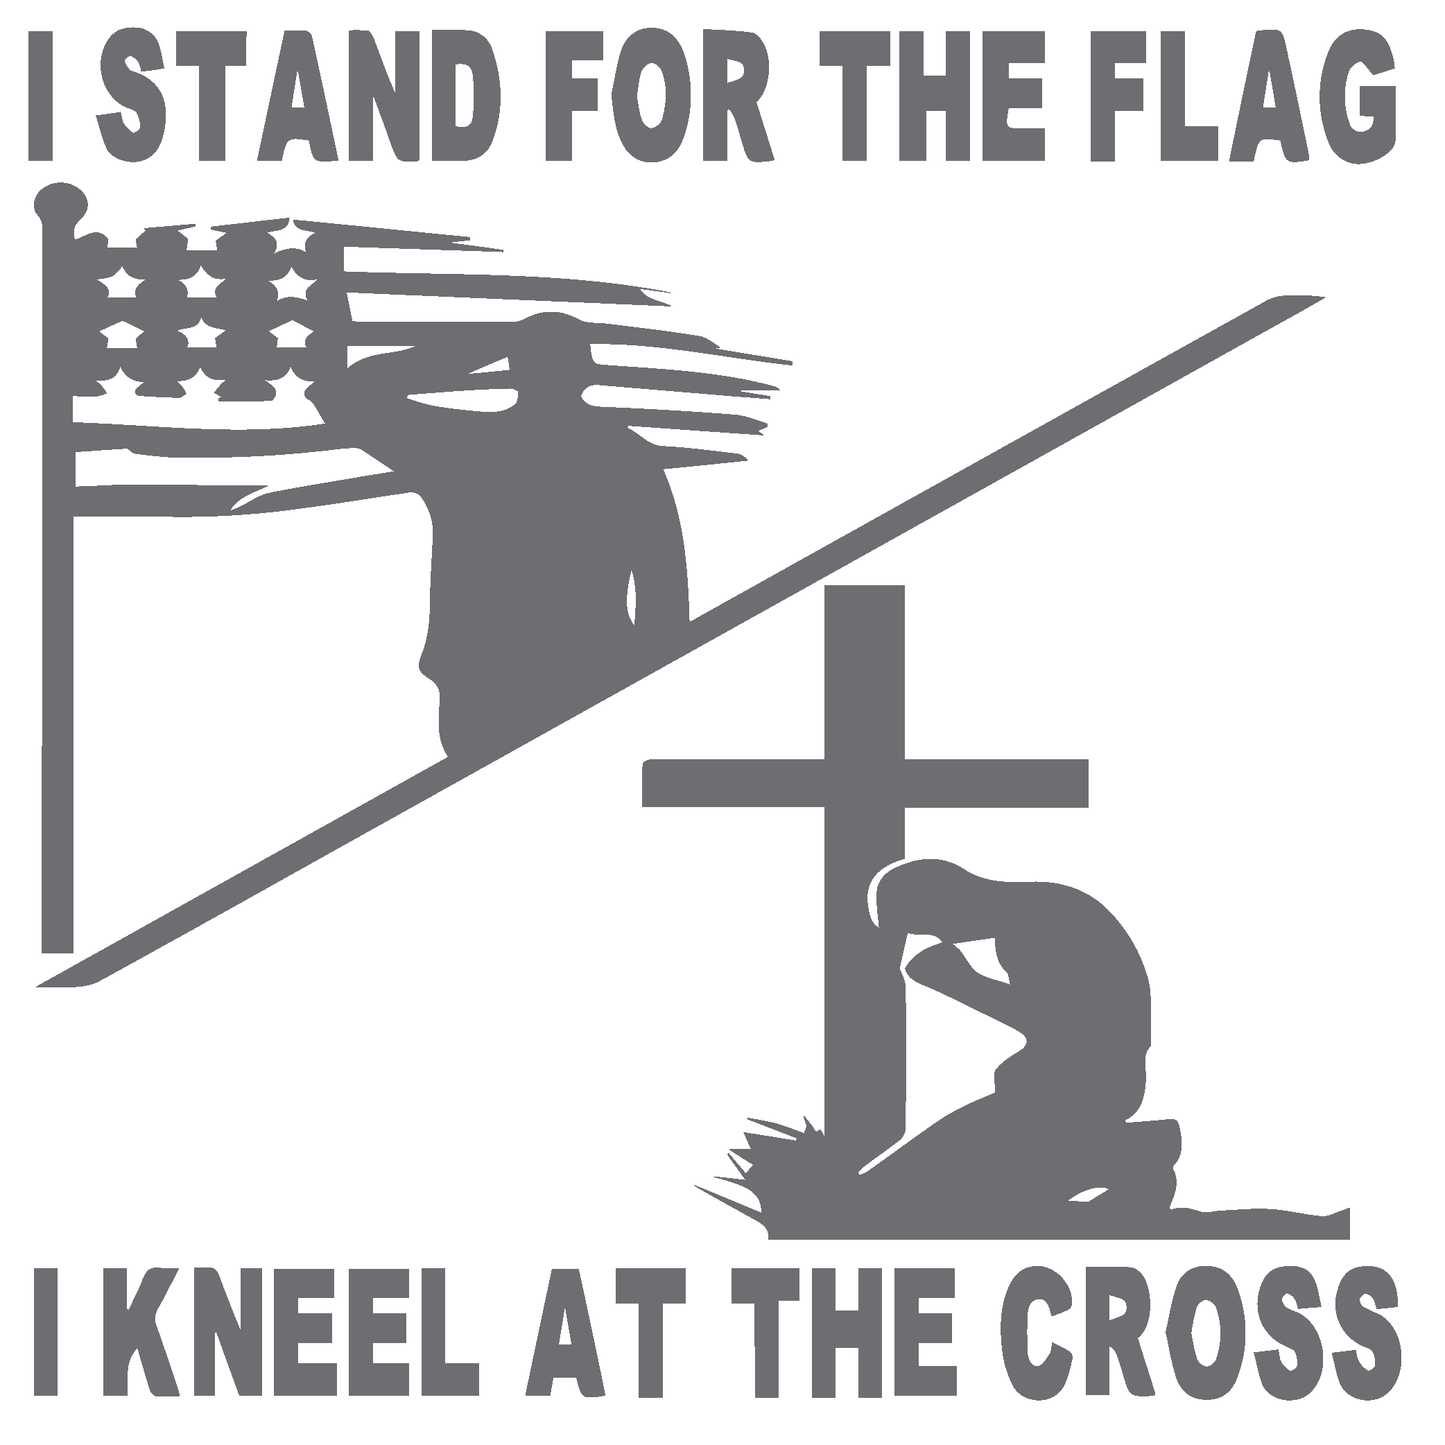 ShopVinylDesignStore.com I Stand For The Flag I Kneel At The Cross Wide Shop Vinyl Design decals stickers